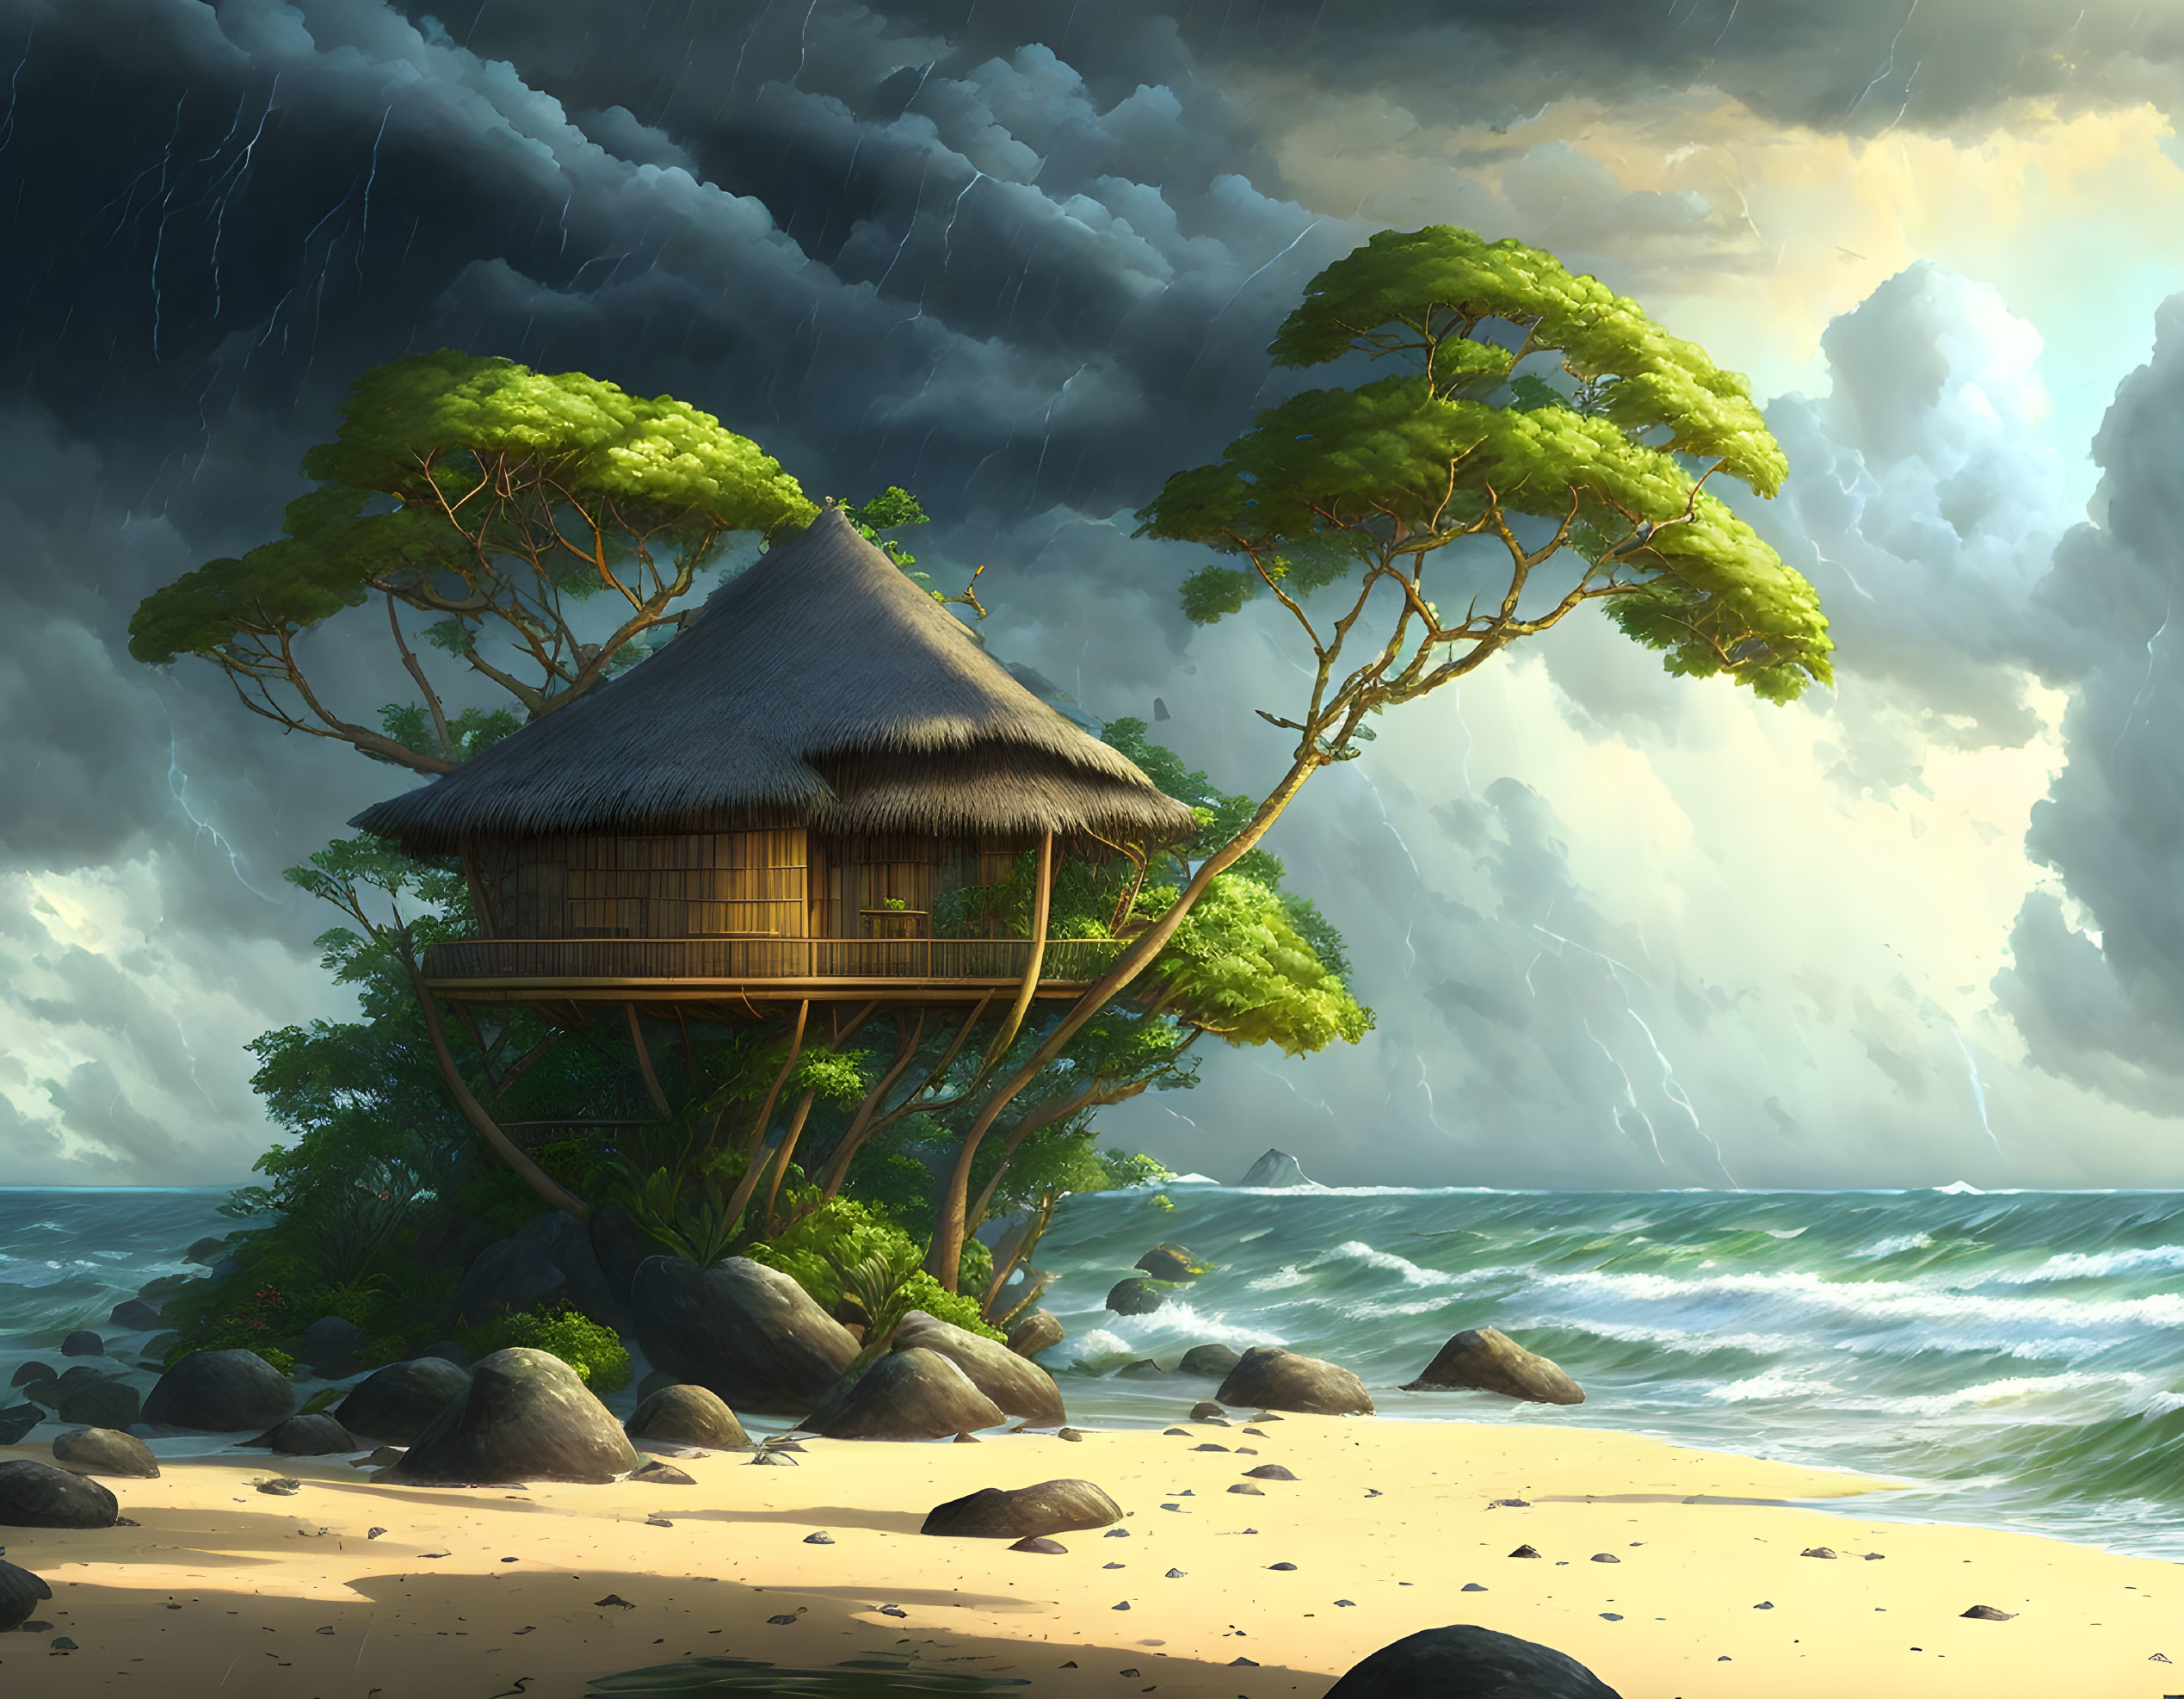  Bamboo beach house